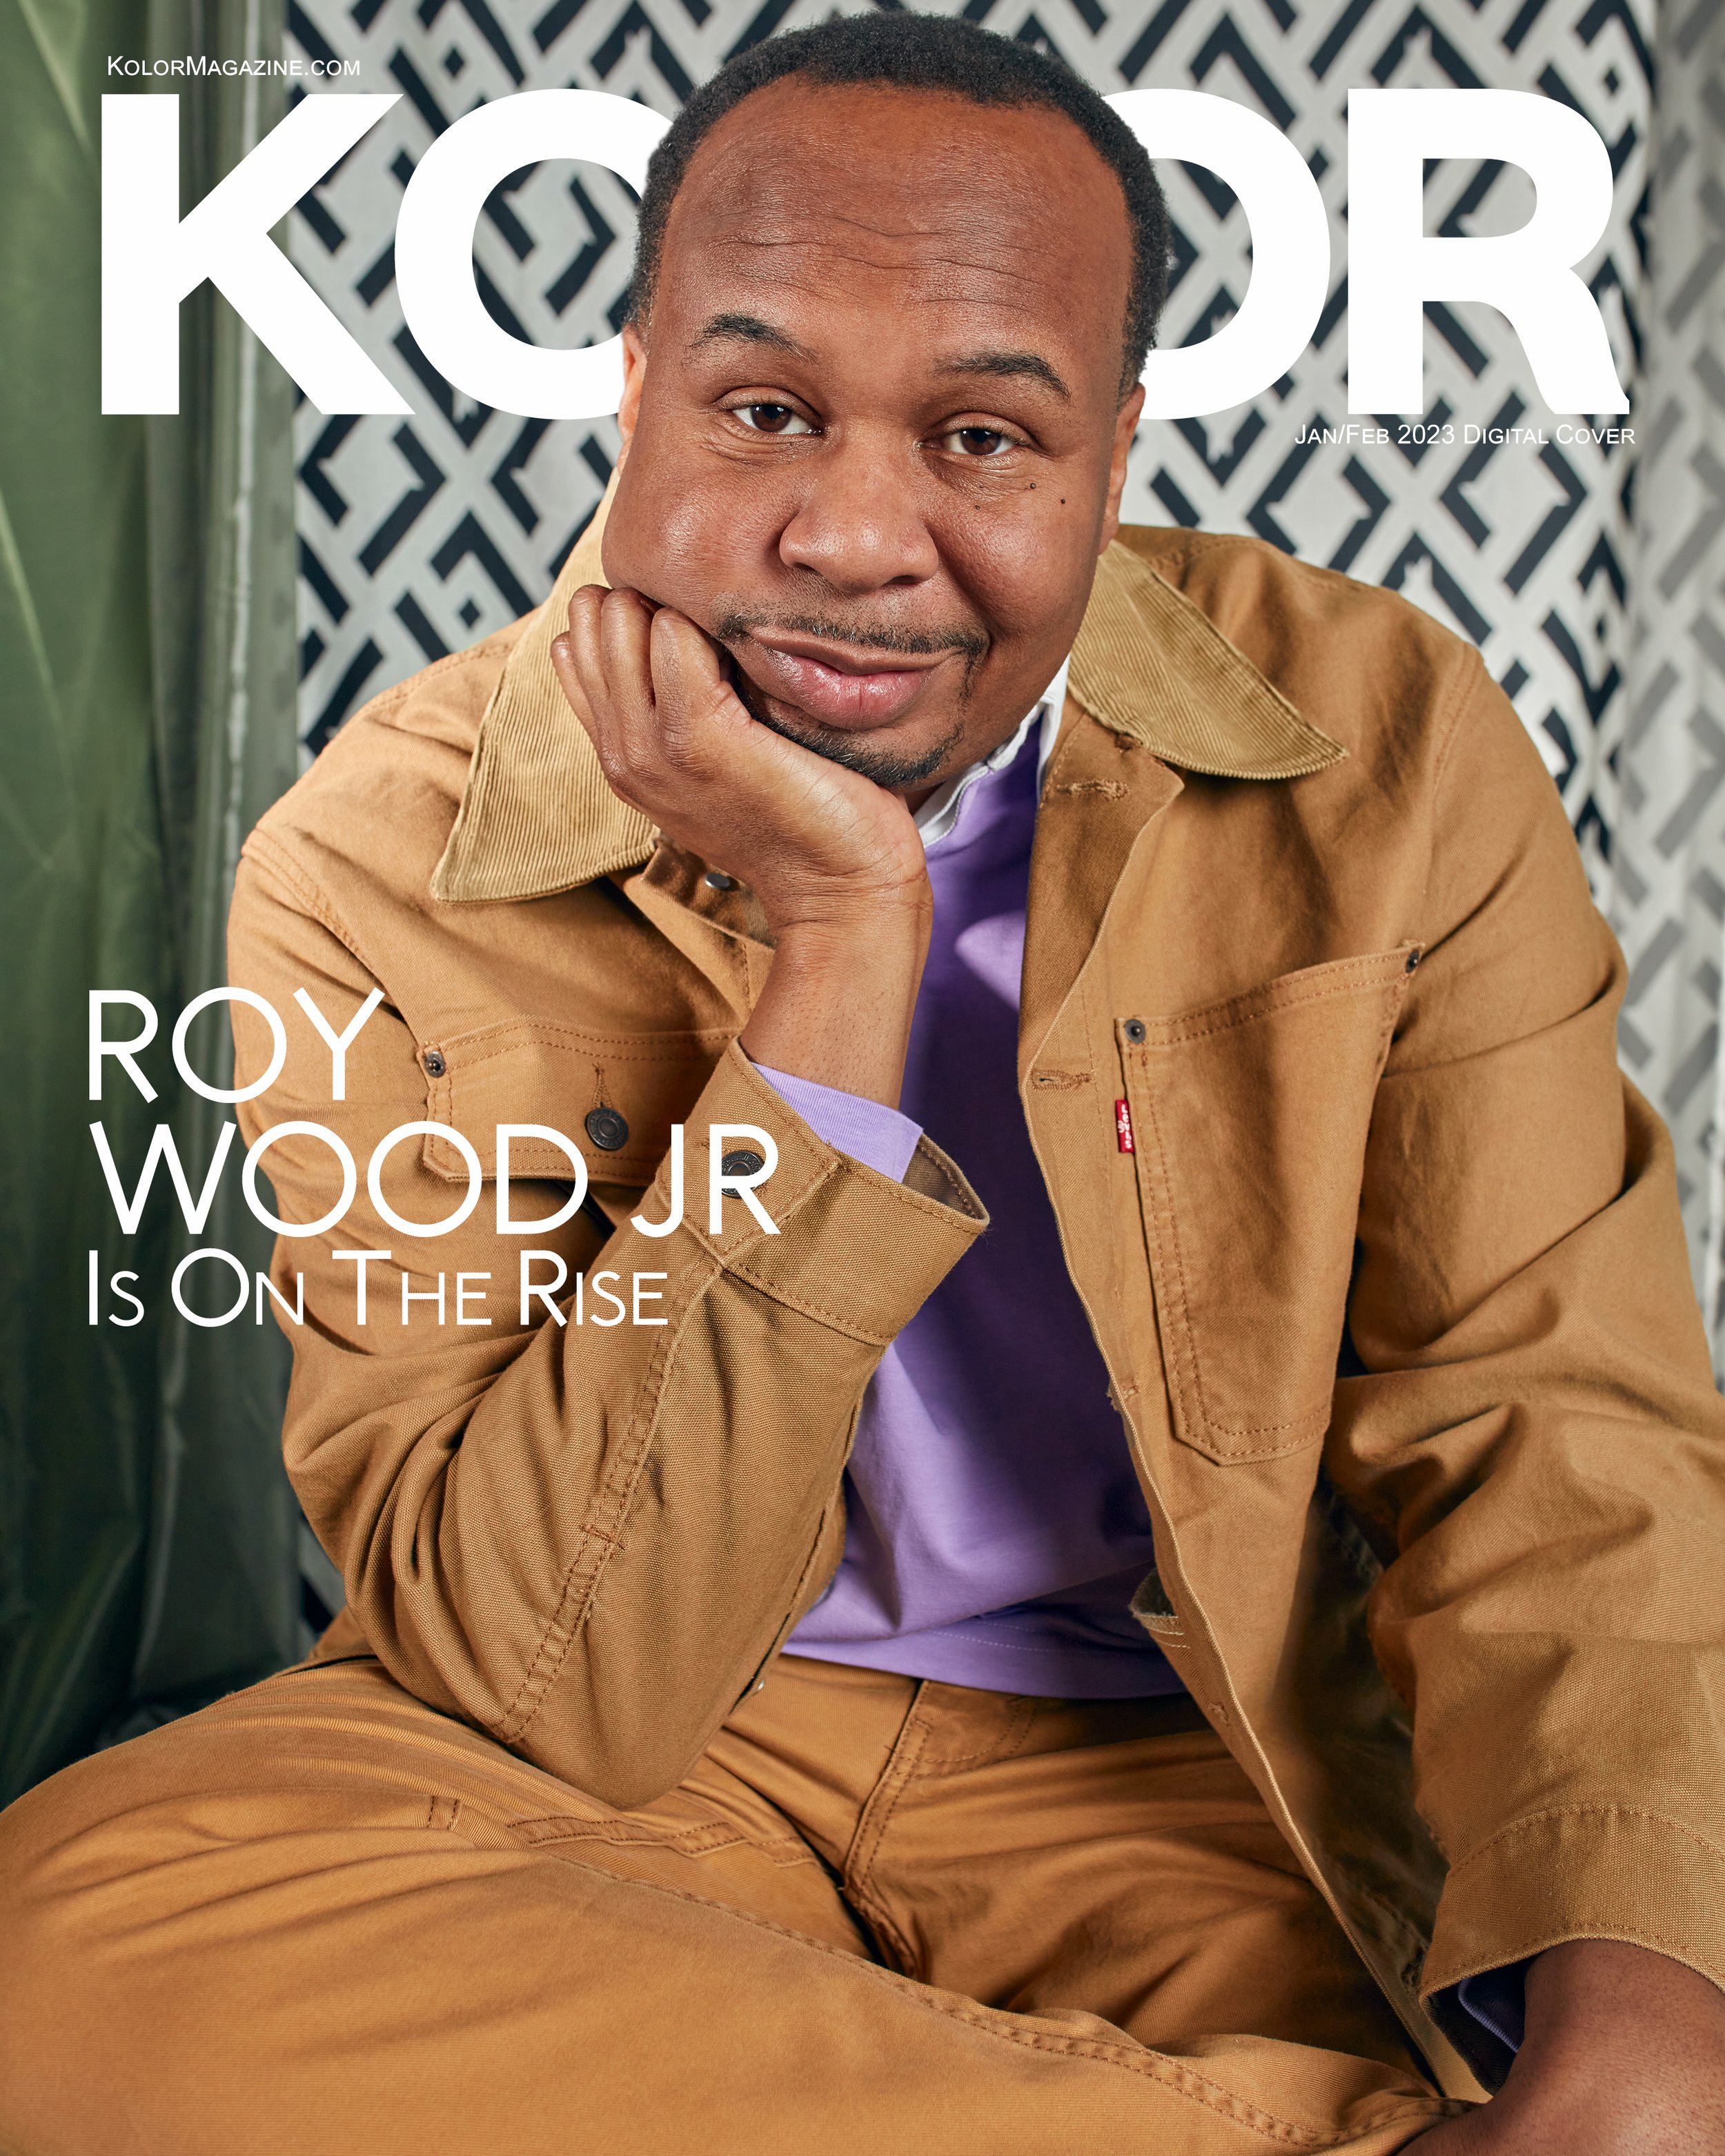 Roy Wood Jr Kolor Magazine Cover 1.jpg